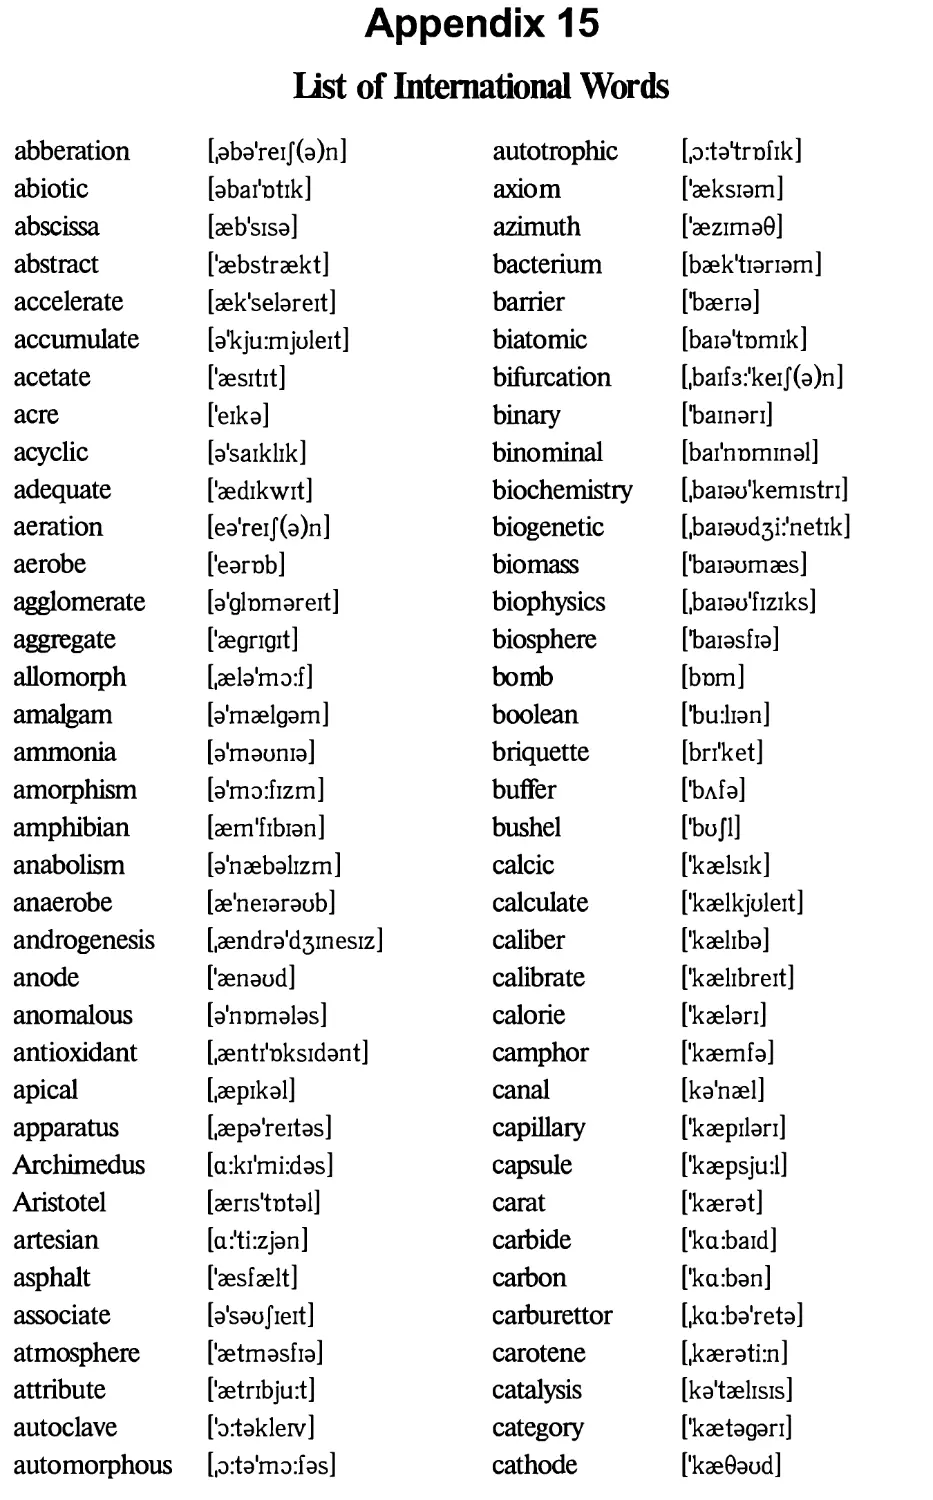 Appendix 15. List of International Words